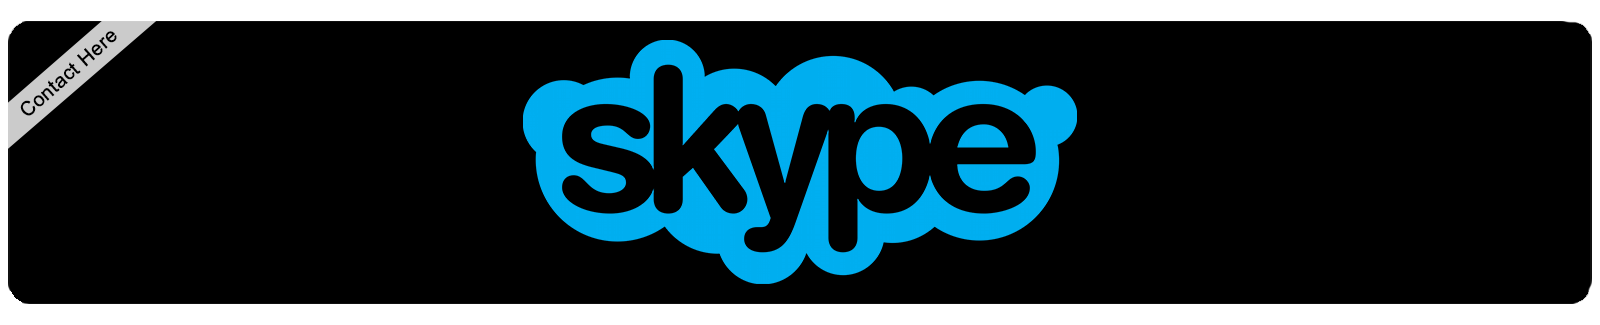 Skypee